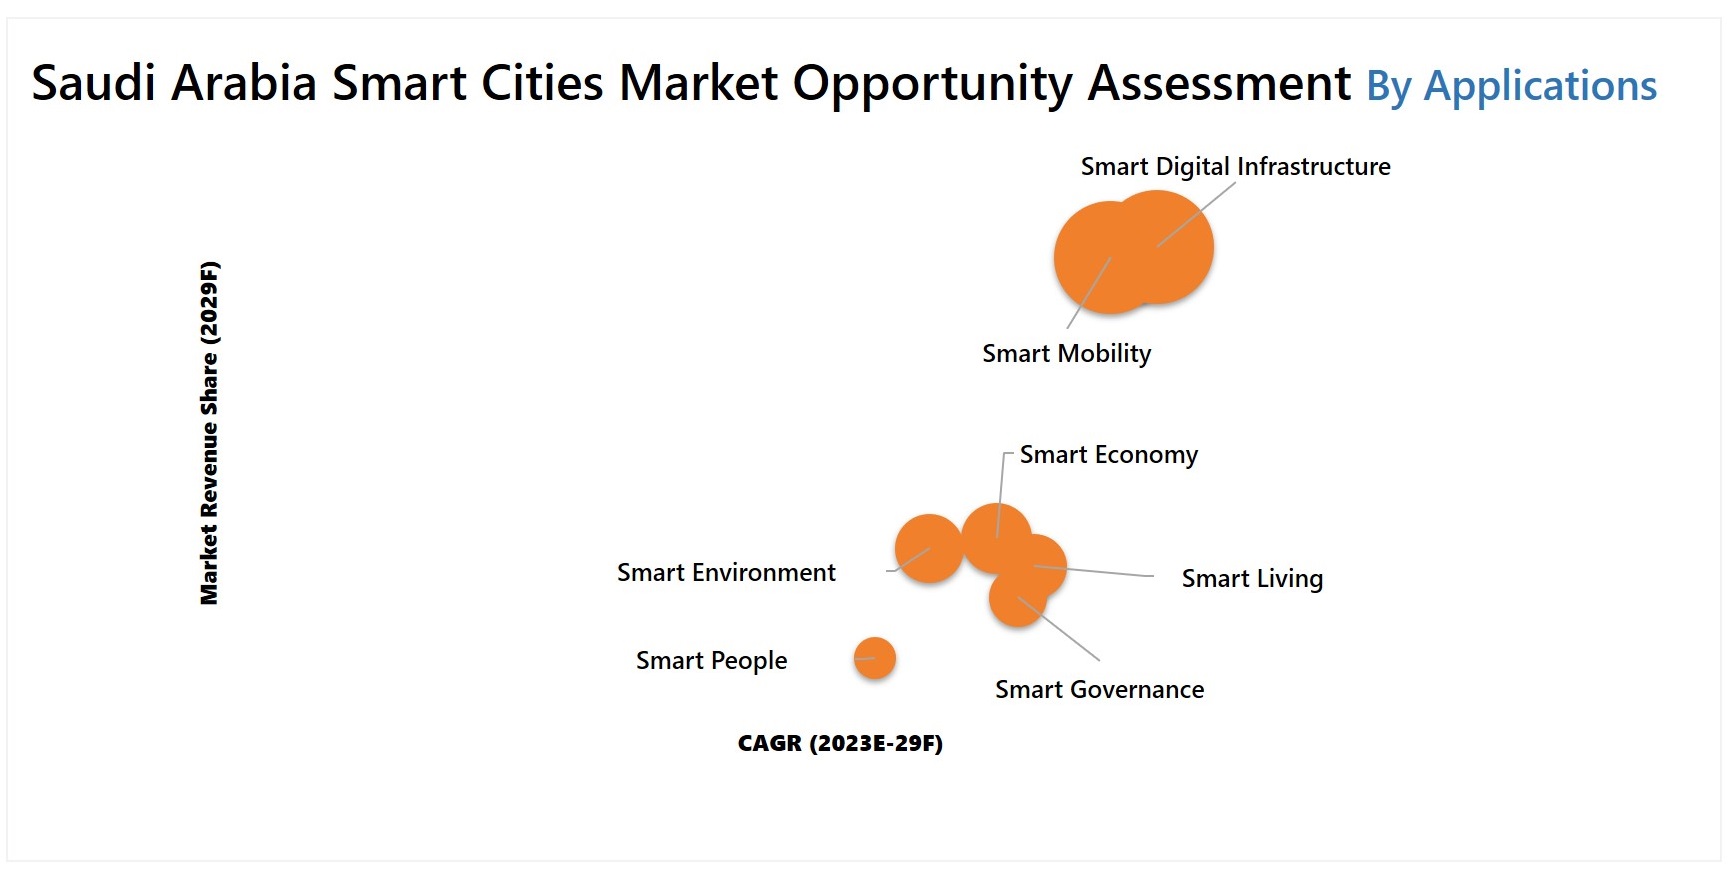 Saudi Arabia Smart Cities Market 